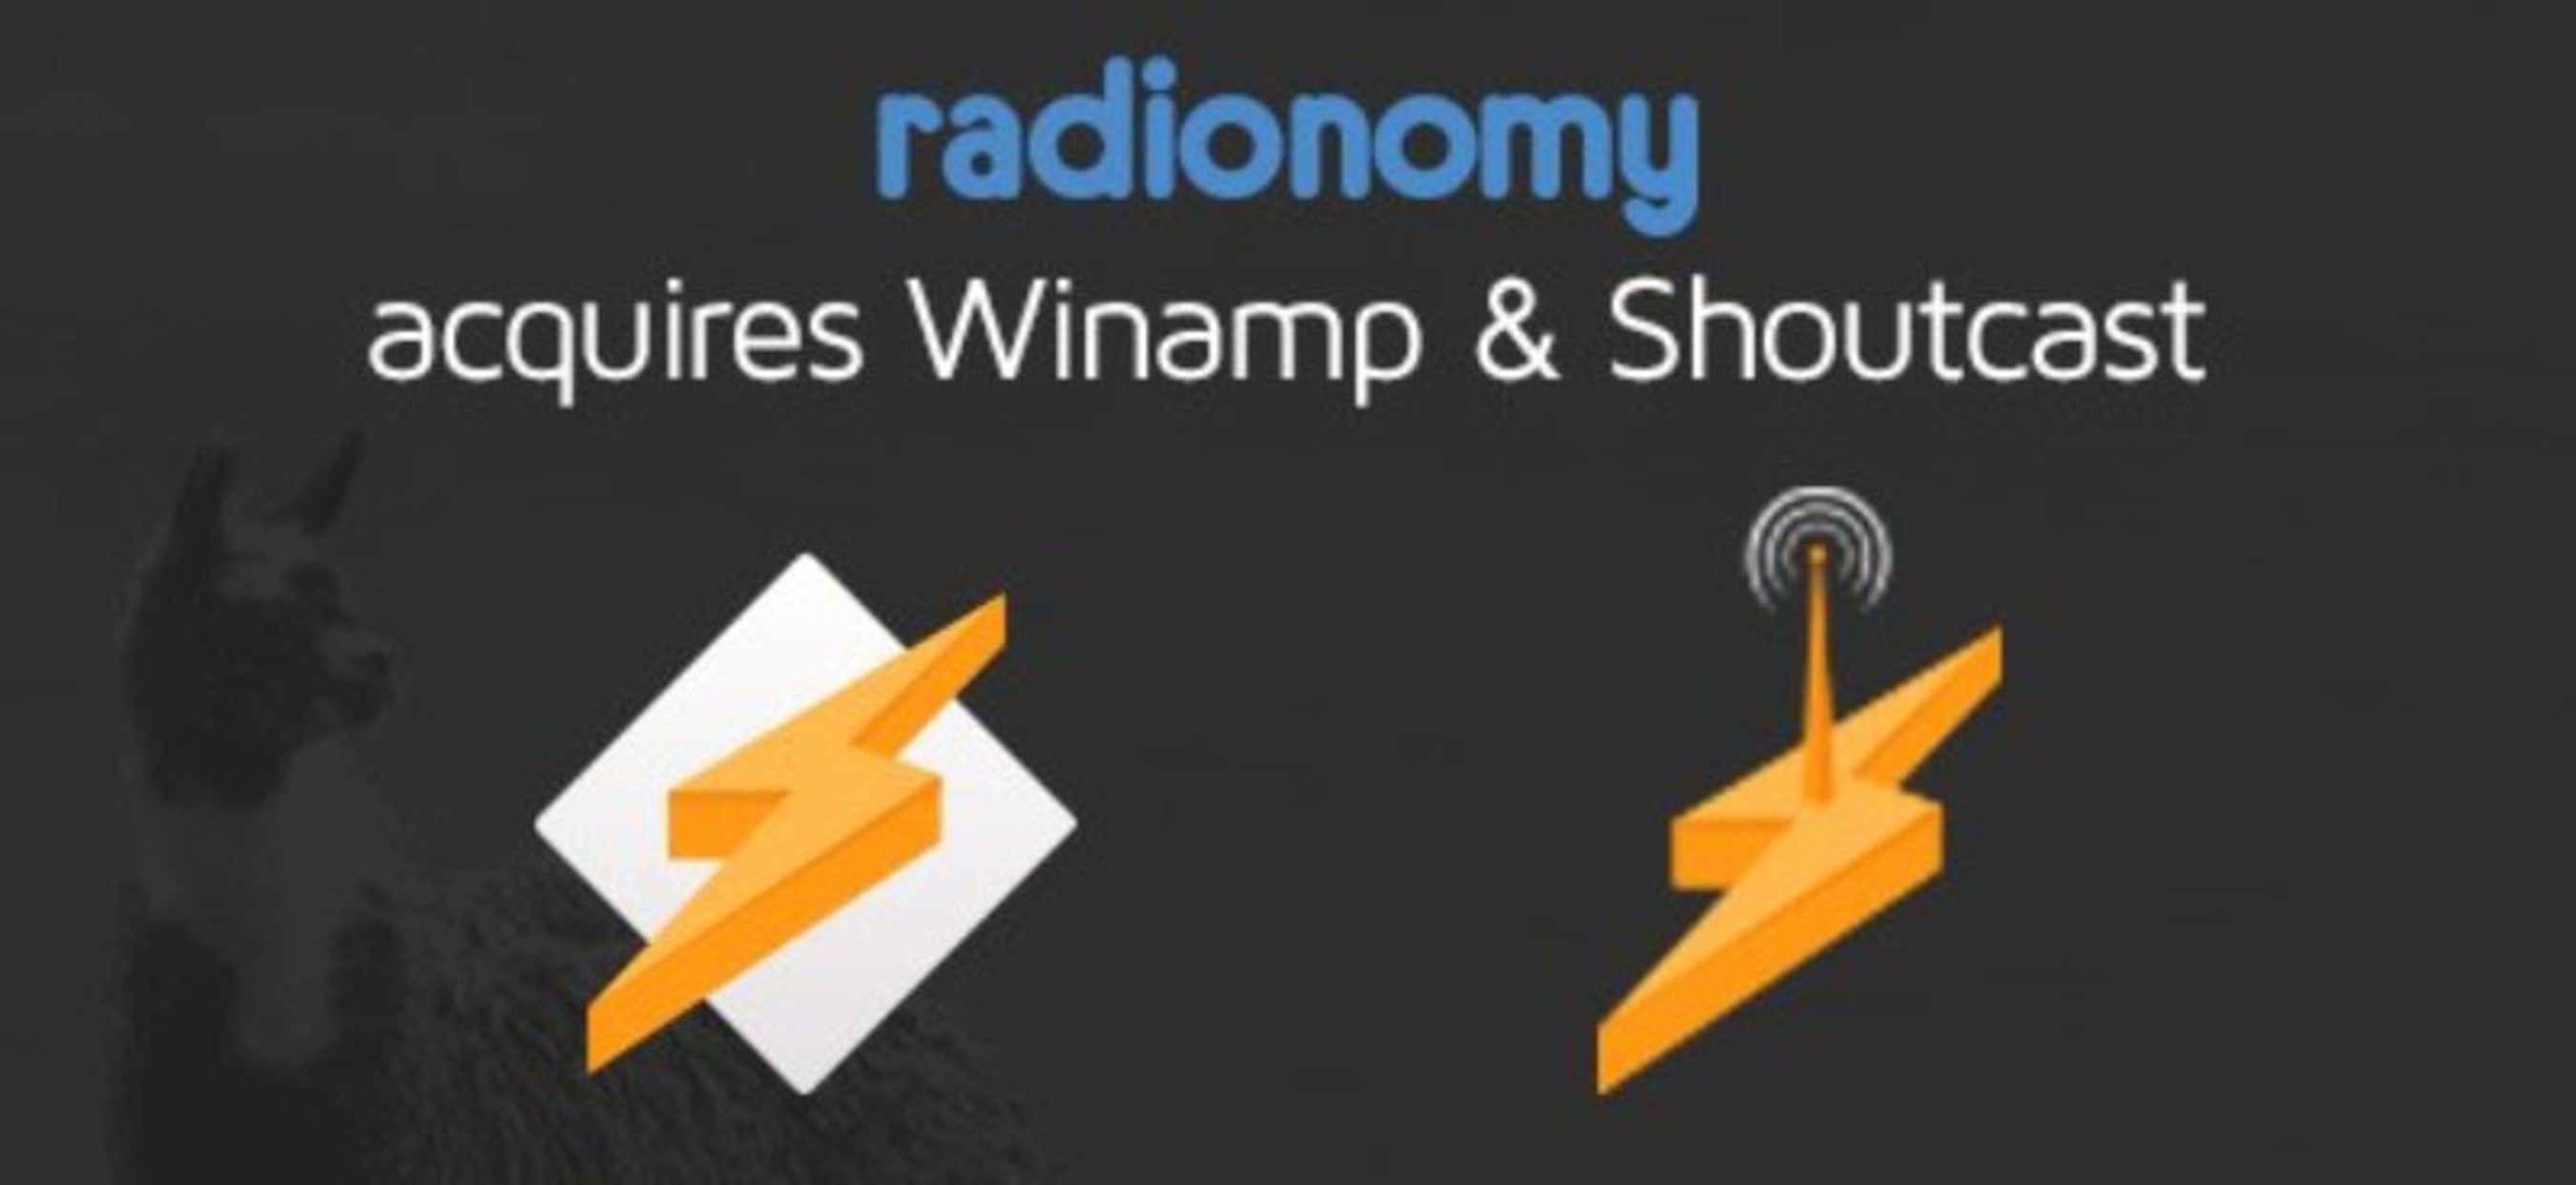 Radionomy Acquires Winamp & Shoutcast. (PRNewsFoto/Radionomy) (PRNewsFoto/RADIONOMY)